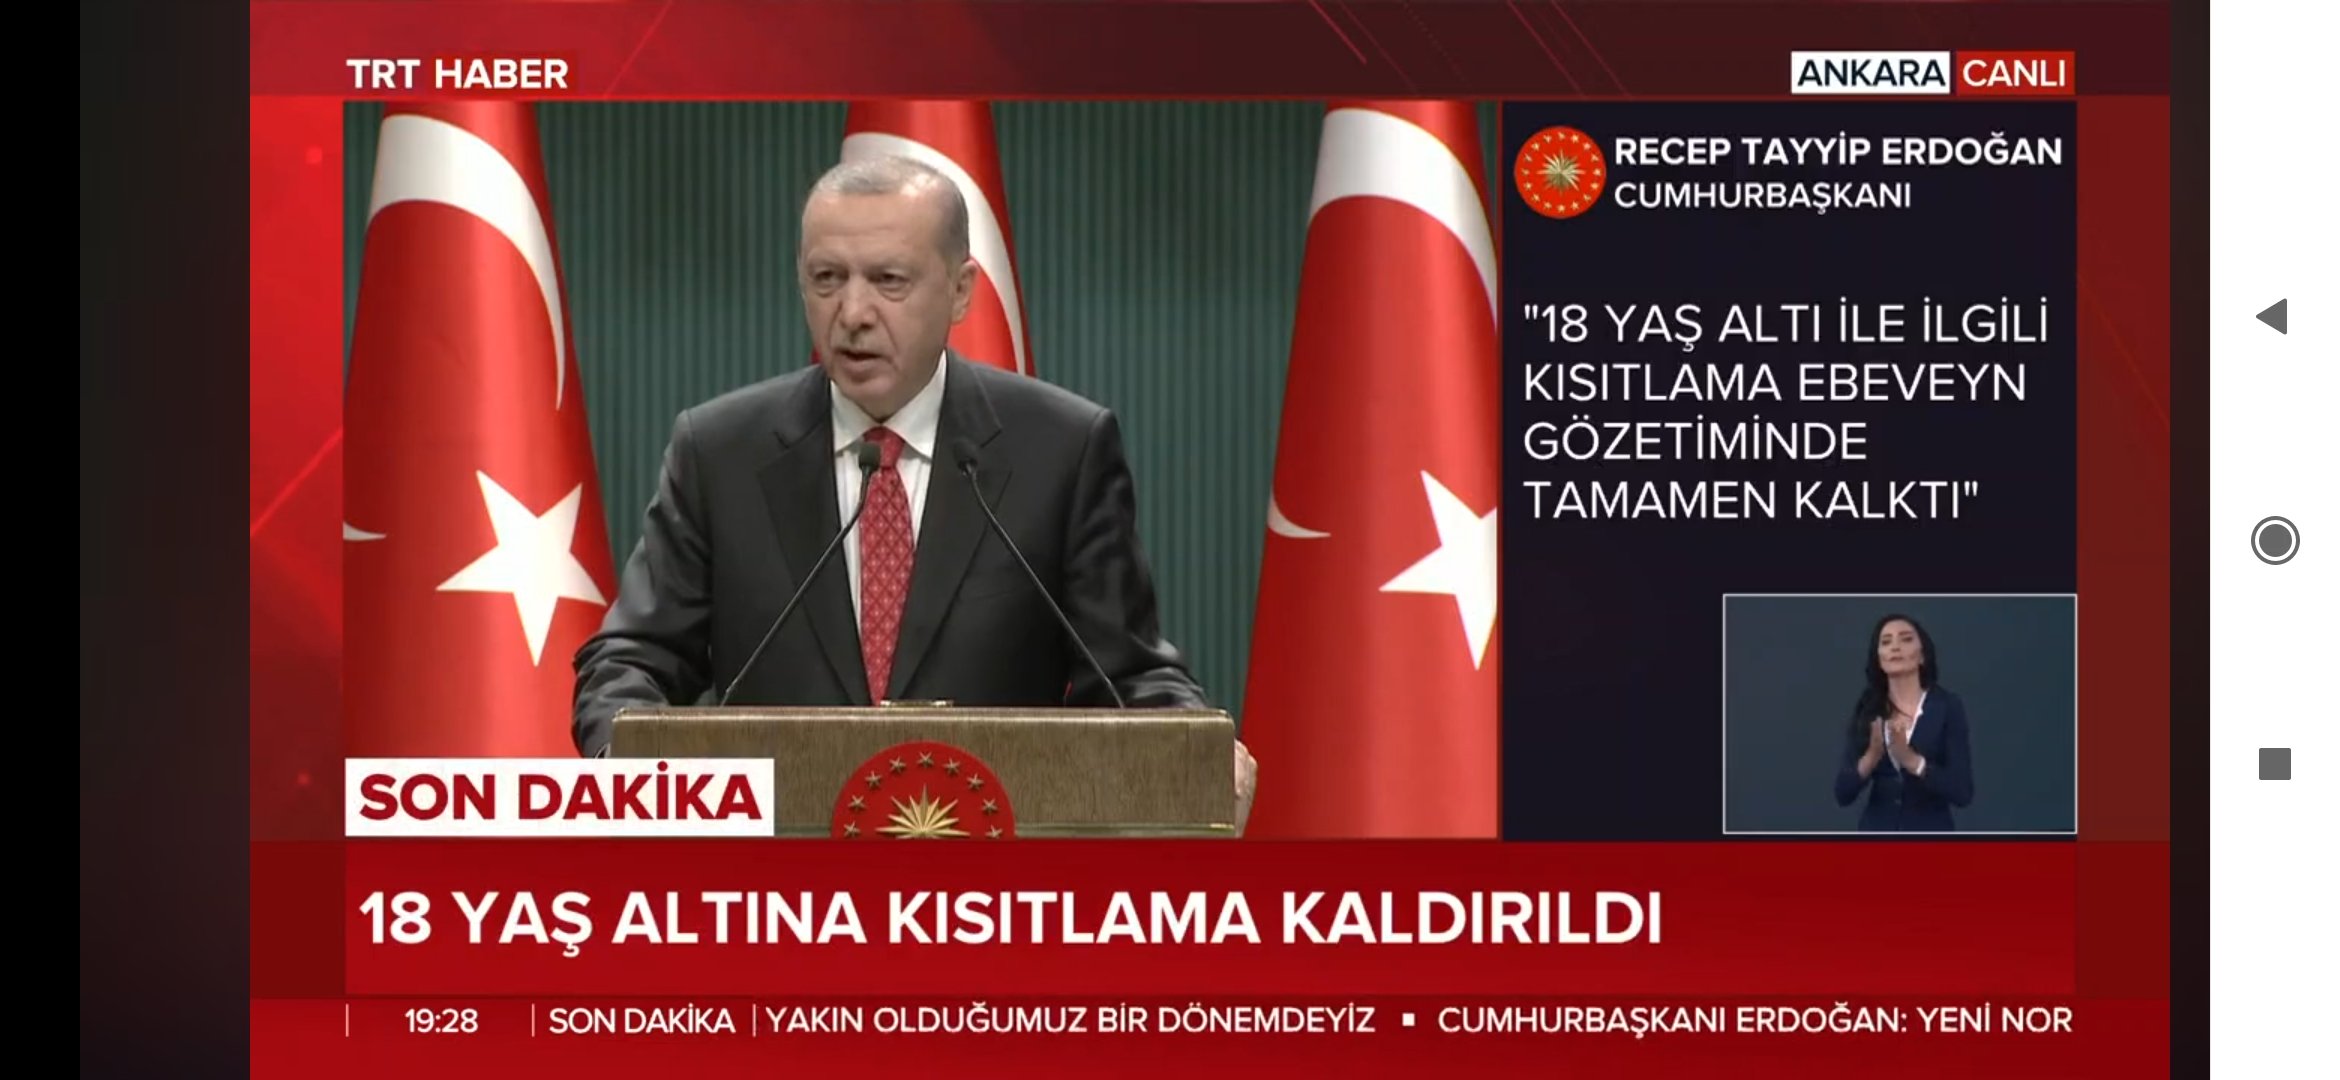 Erdogan 18 Yas Alti Yasagi Sinirli Olarak Kalkti Kredifinansal